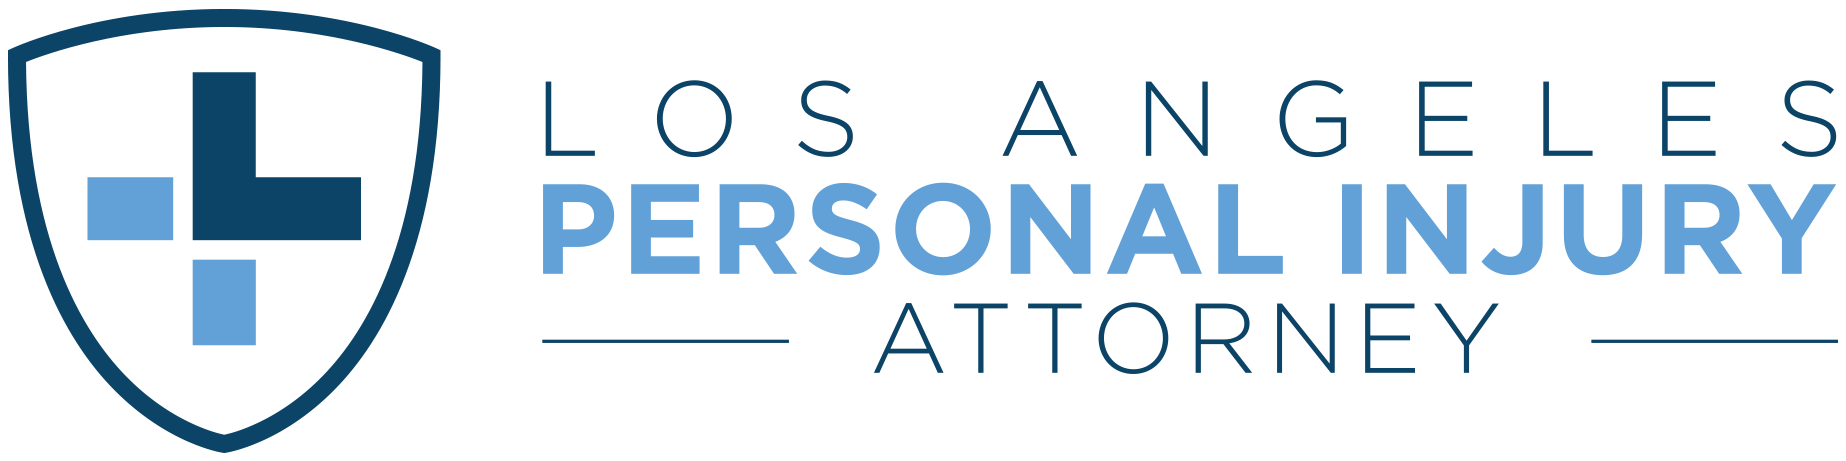 Los Angeles Personal Injury Attorney  logo